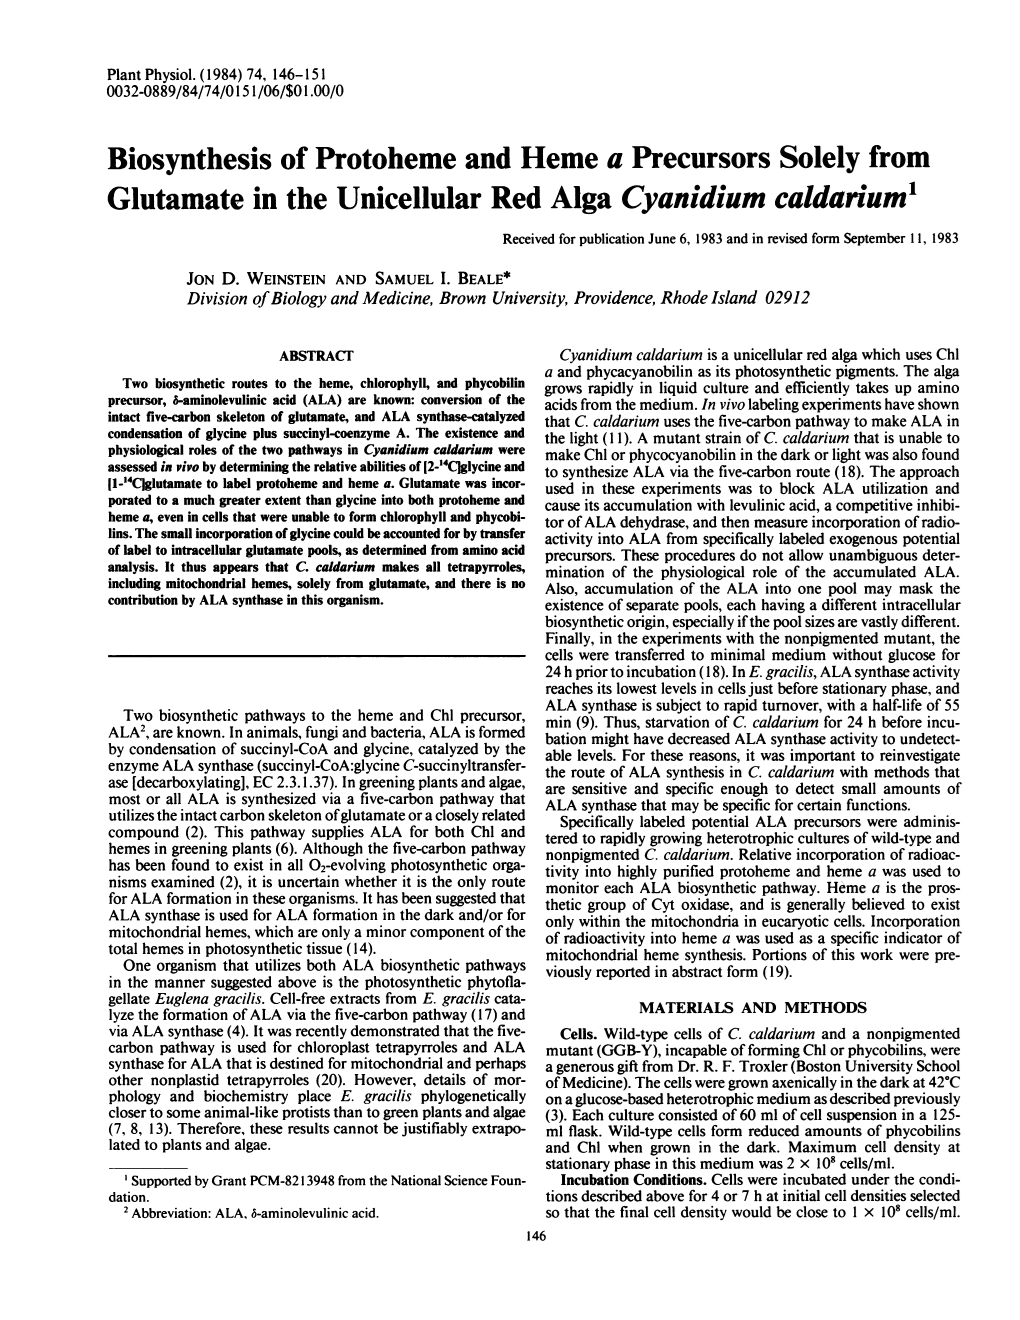 Glutamate in the Unicellular Red Alga Cyanidium Caldarium1 Received for Publication June 6, 1983 and in Revised Form September 11, 1983